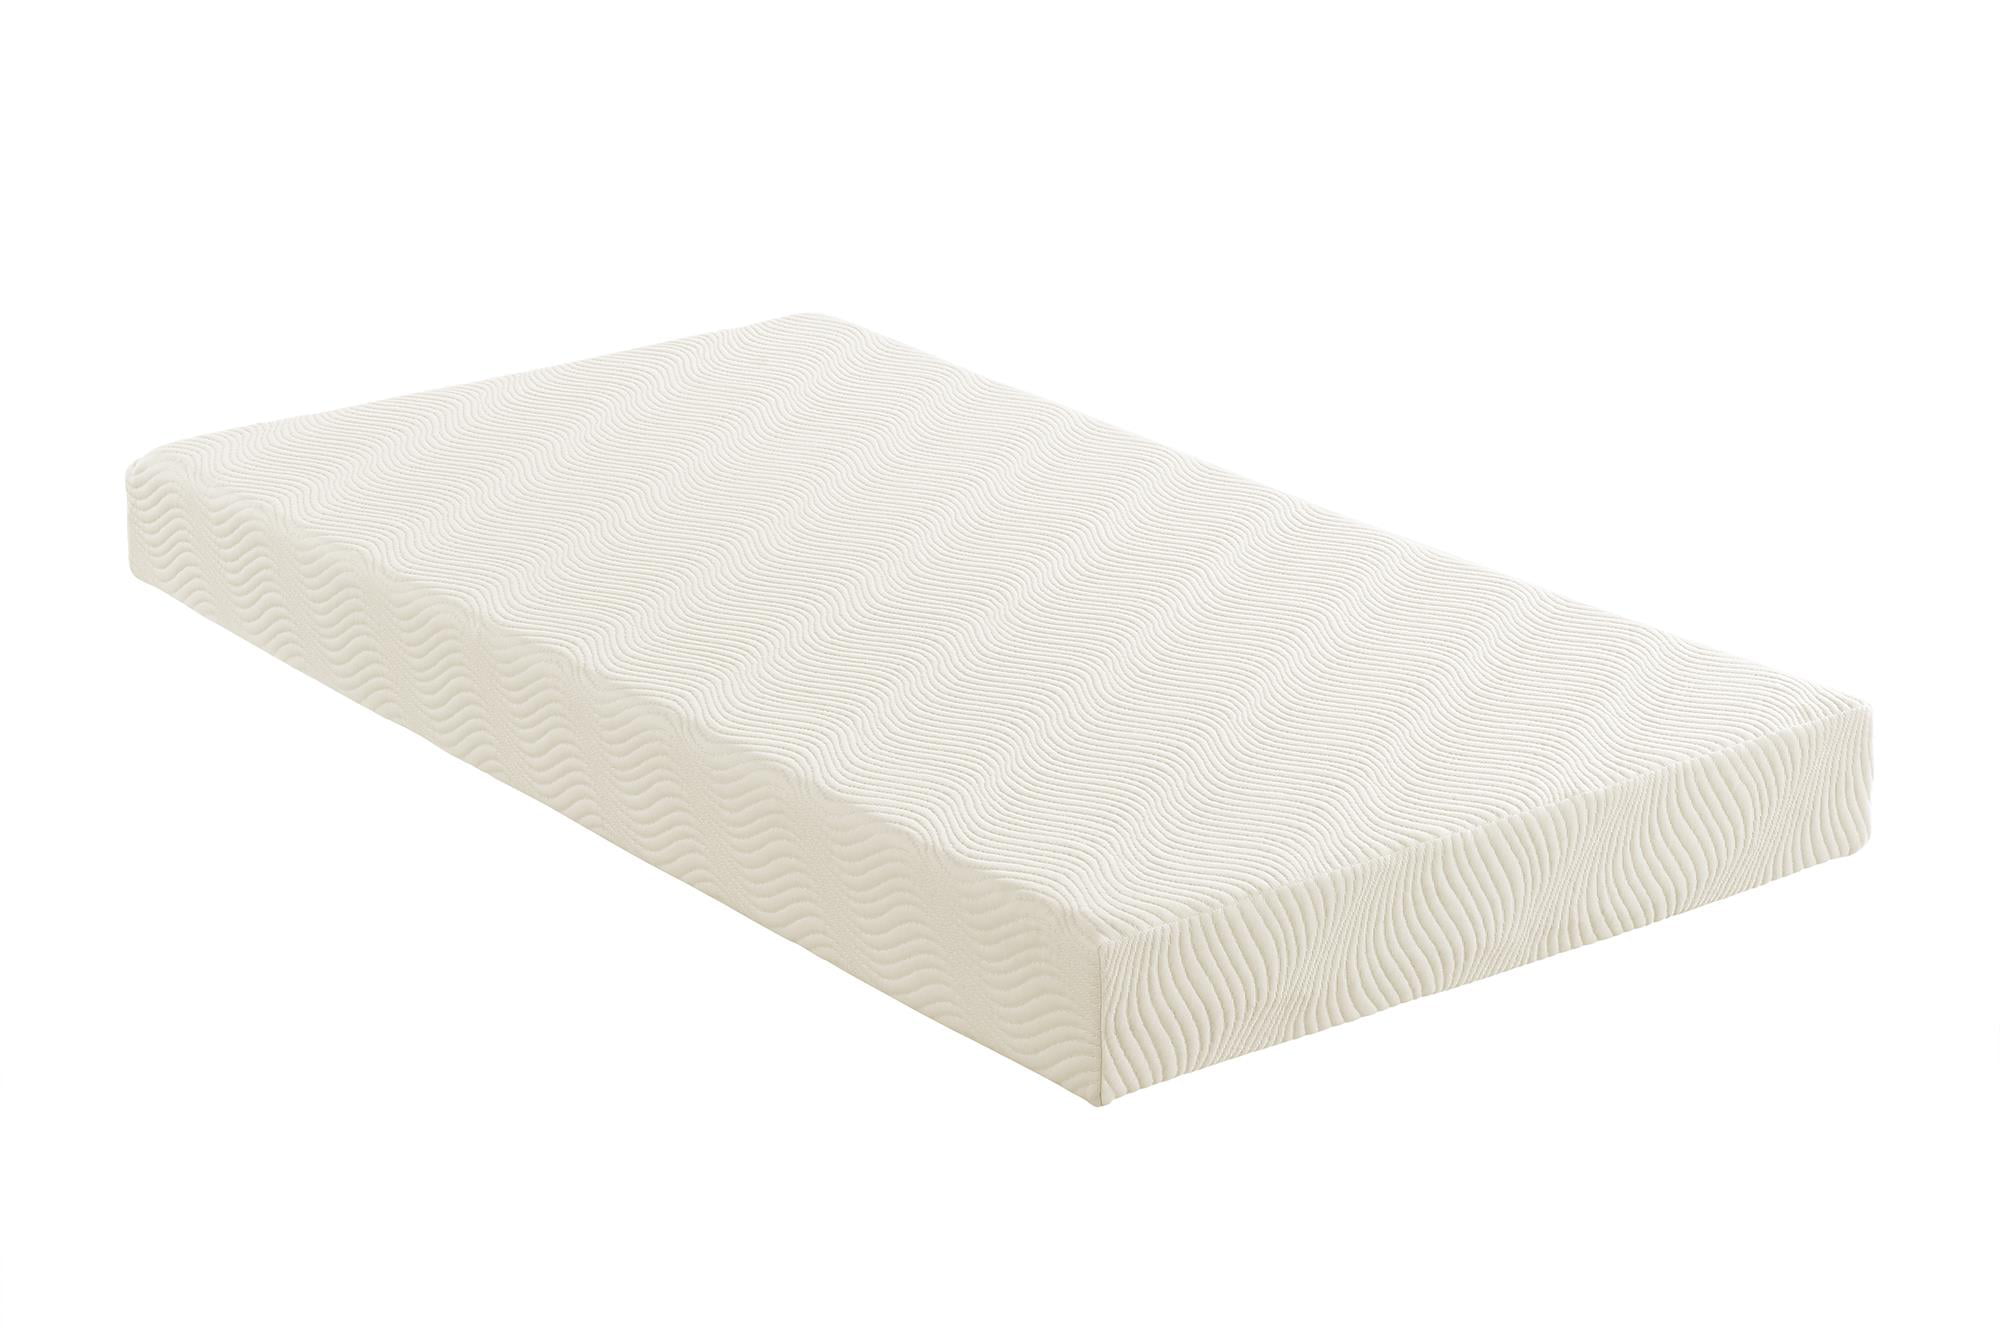 mainstays 8 inch memory foam mattress multiple sizes